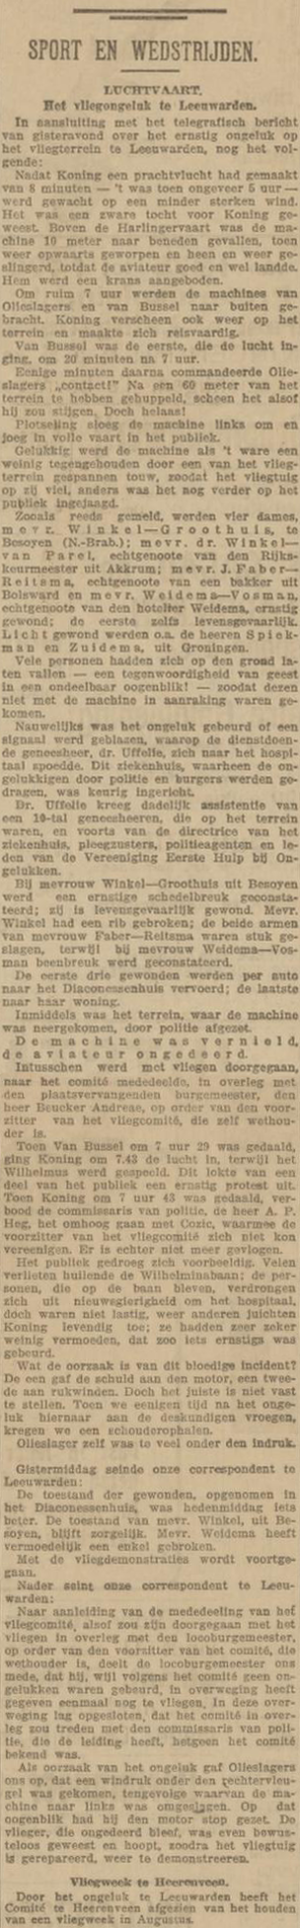 De courant, 15 juli 1911